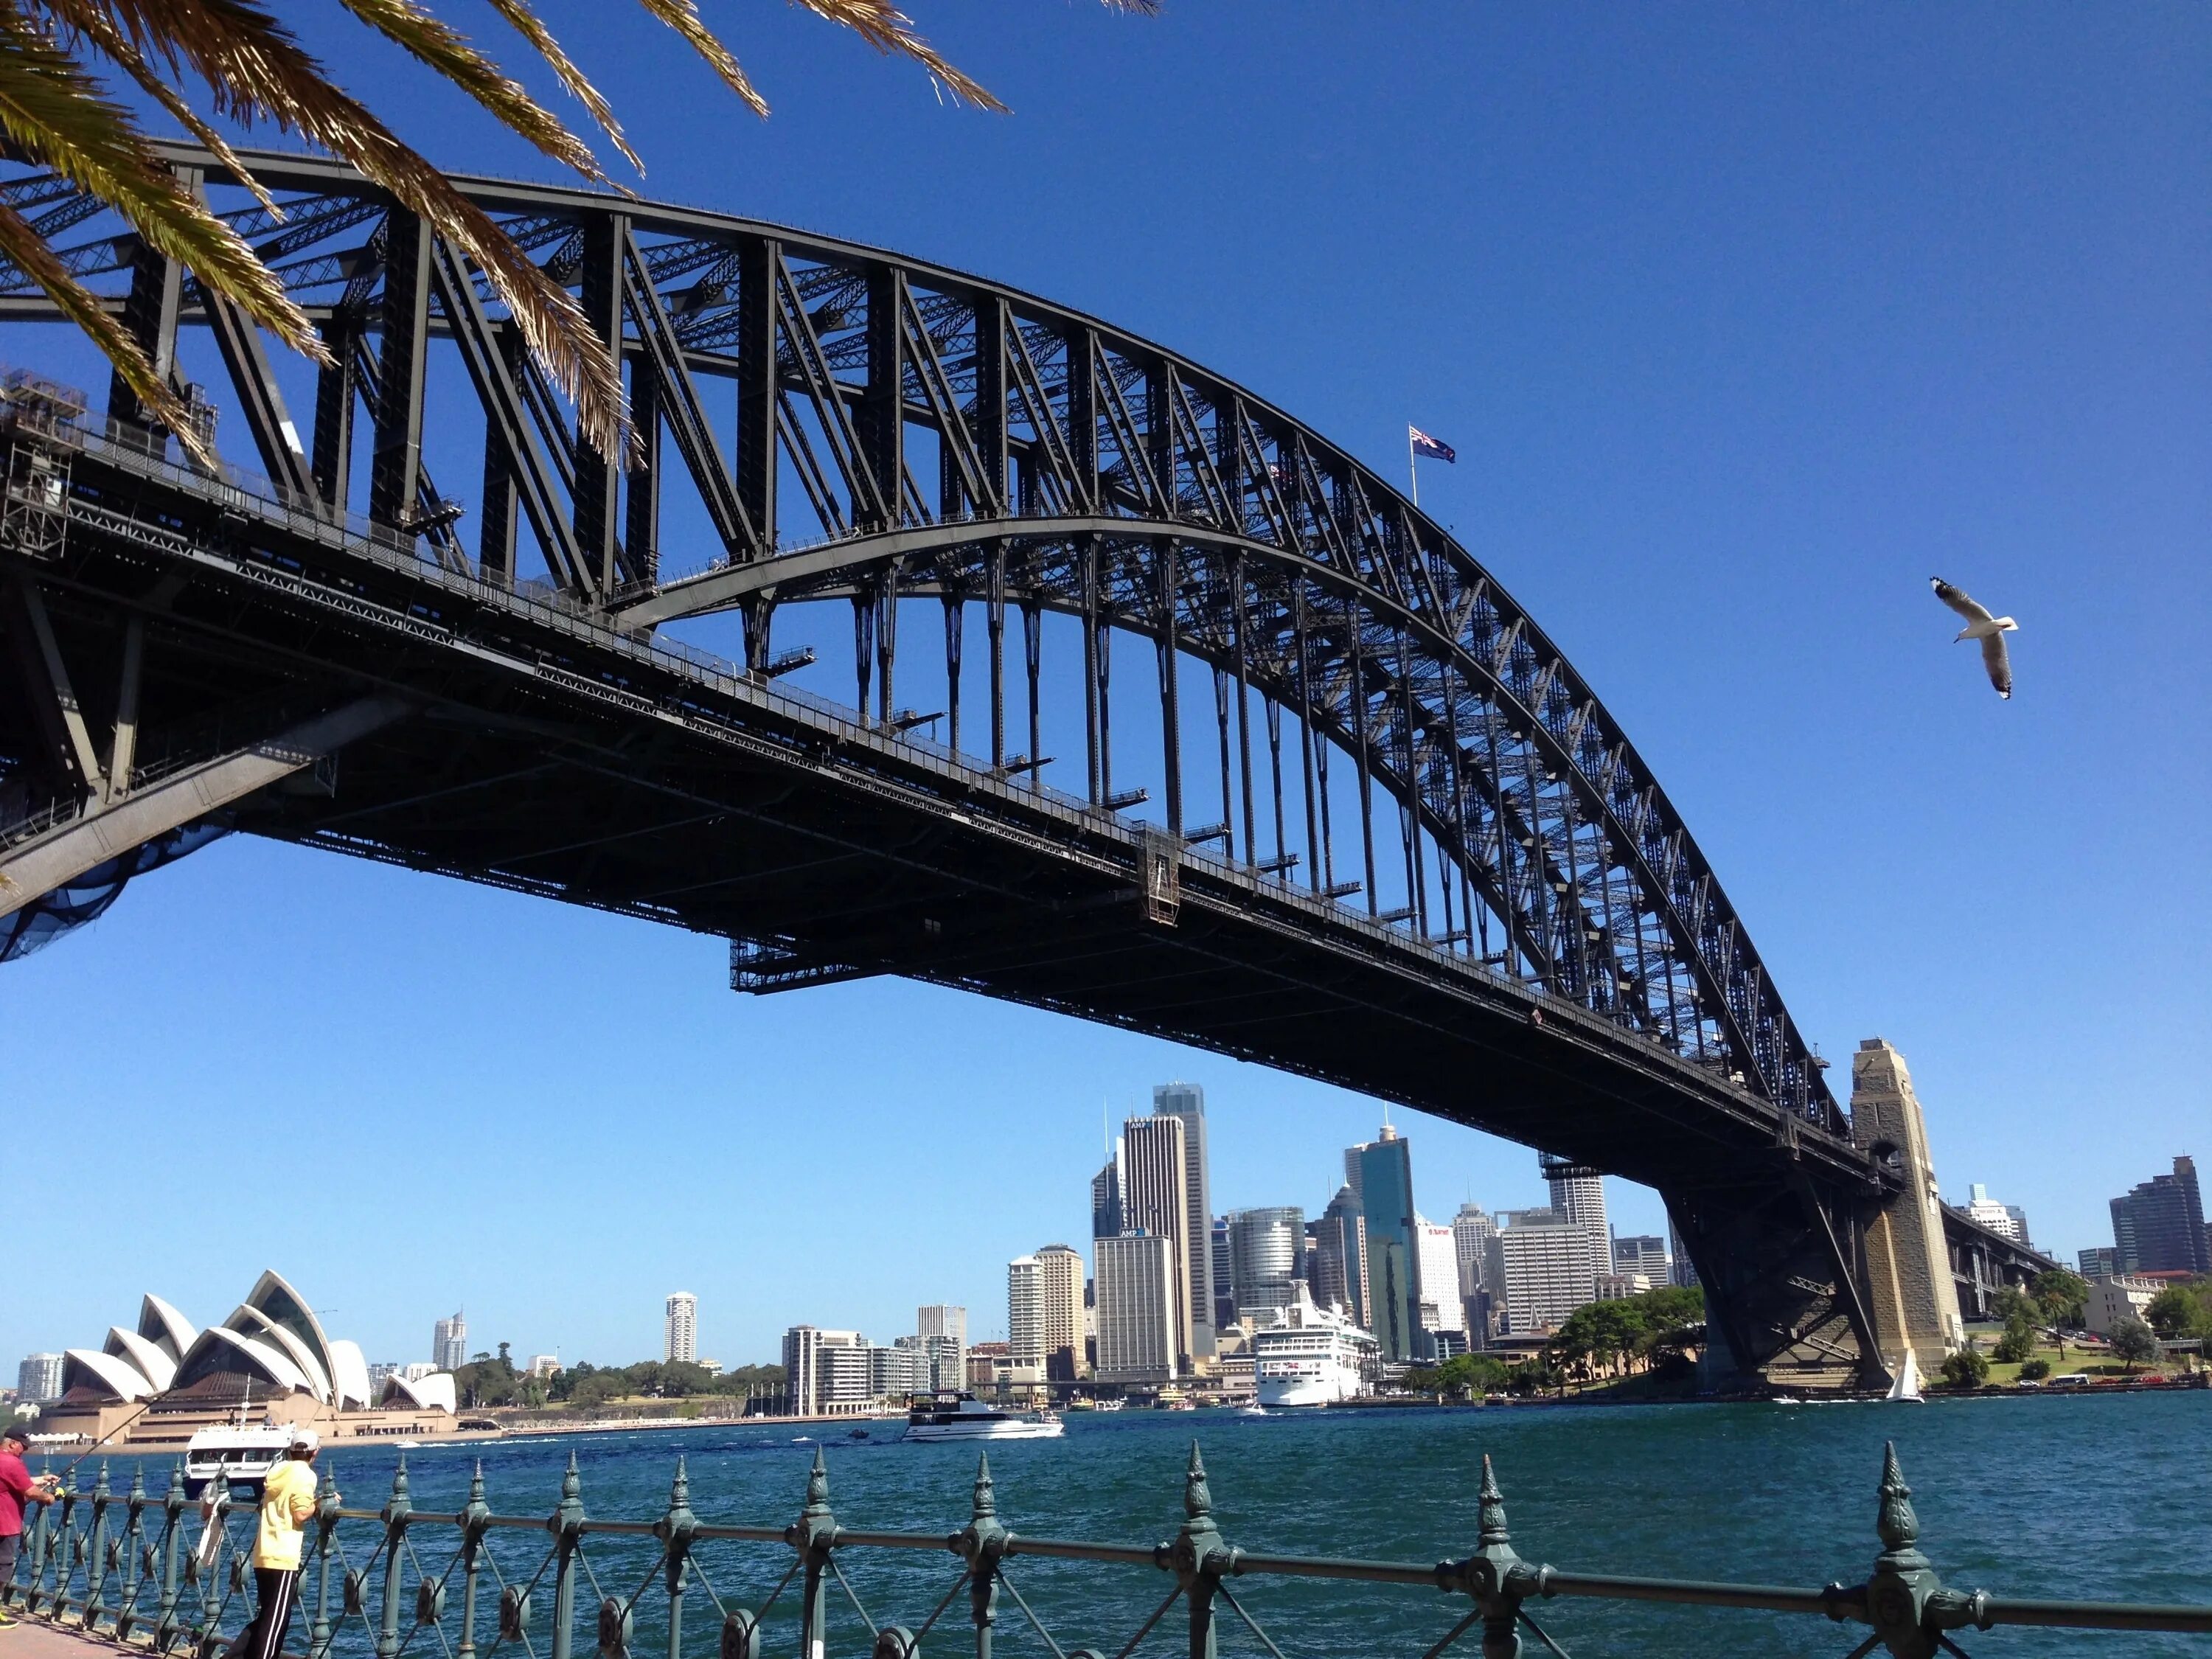 Harbour bridge. Харбор-бридж Сидней. Сиднейский Харбор-бридж, Австралия. Мост Харбор бридж в Австралии. Мост Харбор-бридж в Сиднее архитектура.